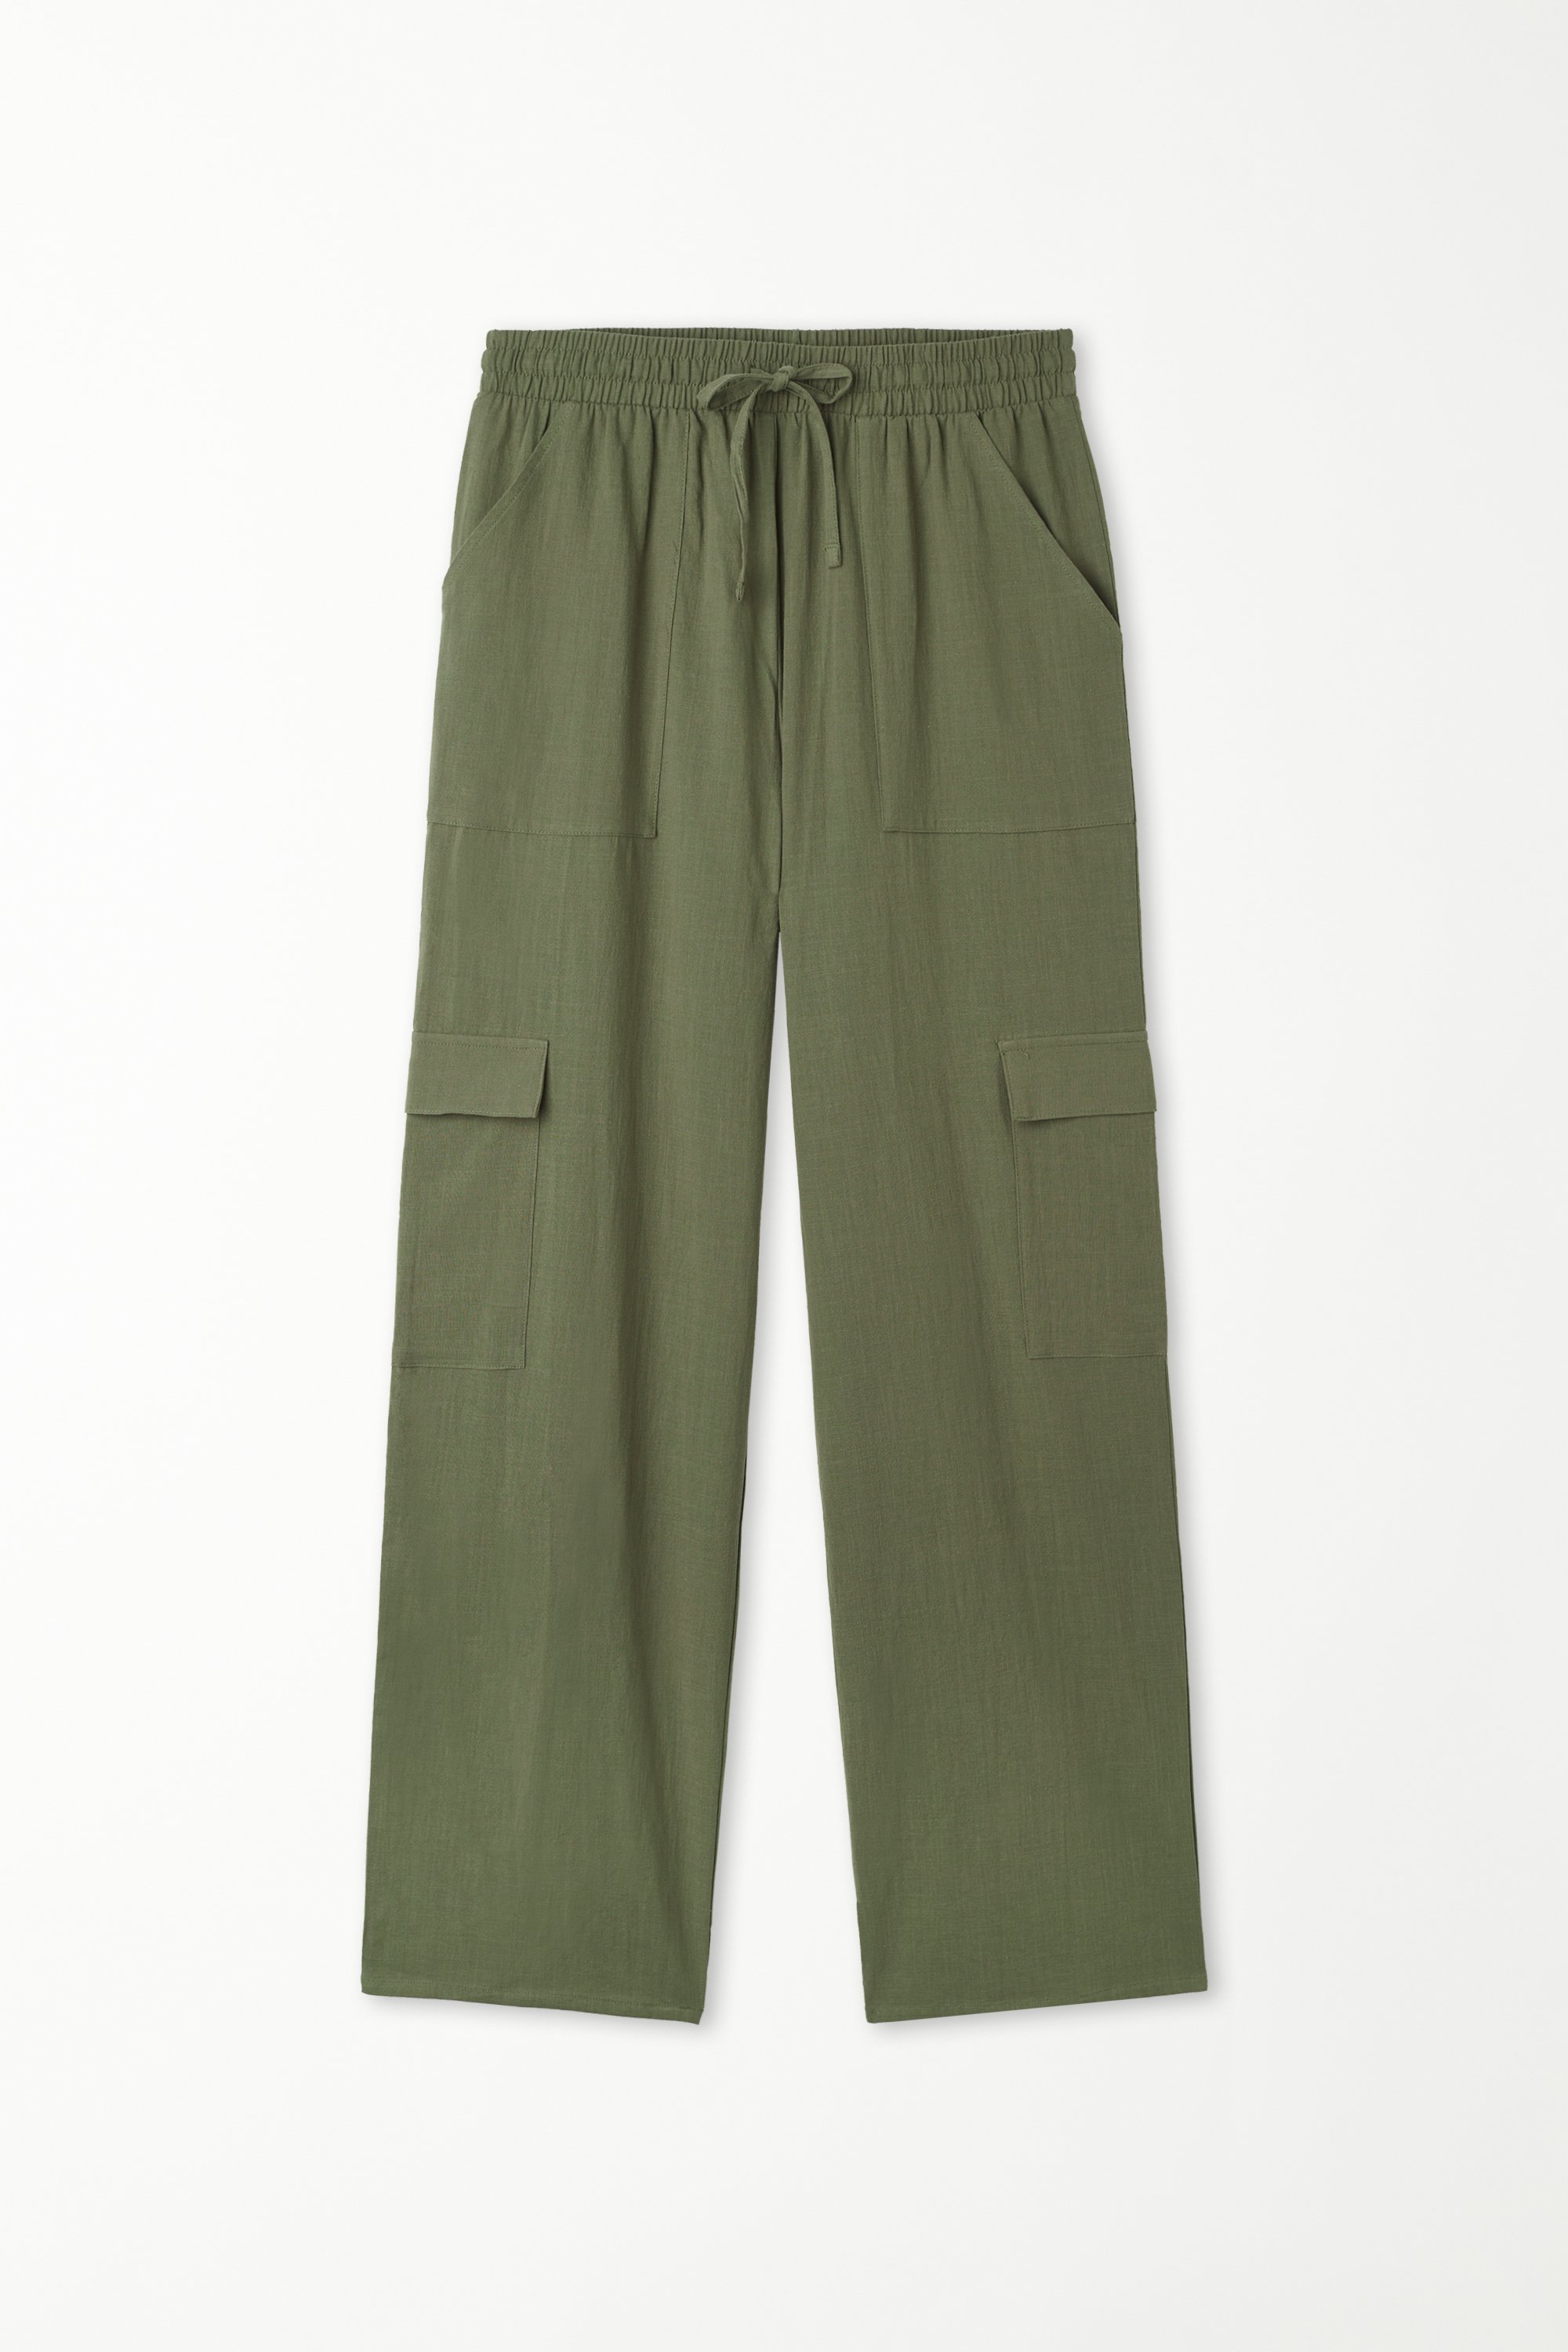 Pantaloni Lungi din Bumbac Super-Lejer 100% cu Buzunare Cargo